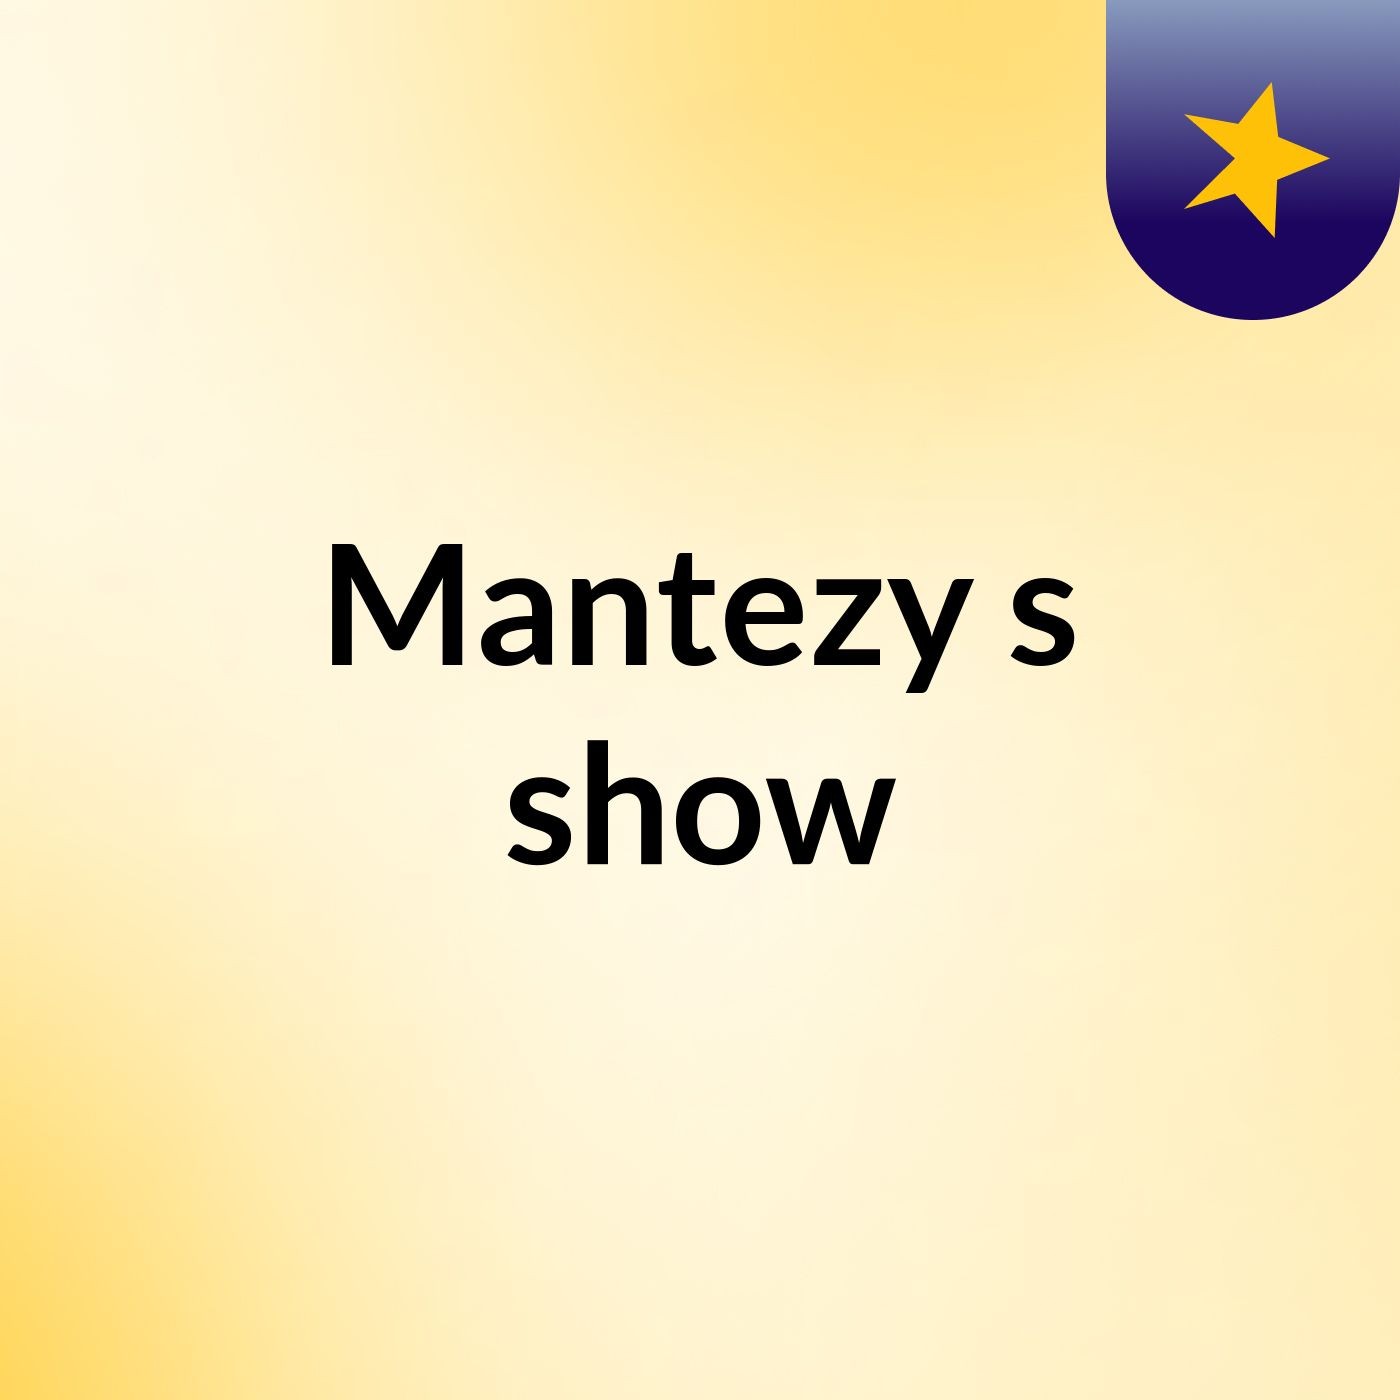 Mantezy's show